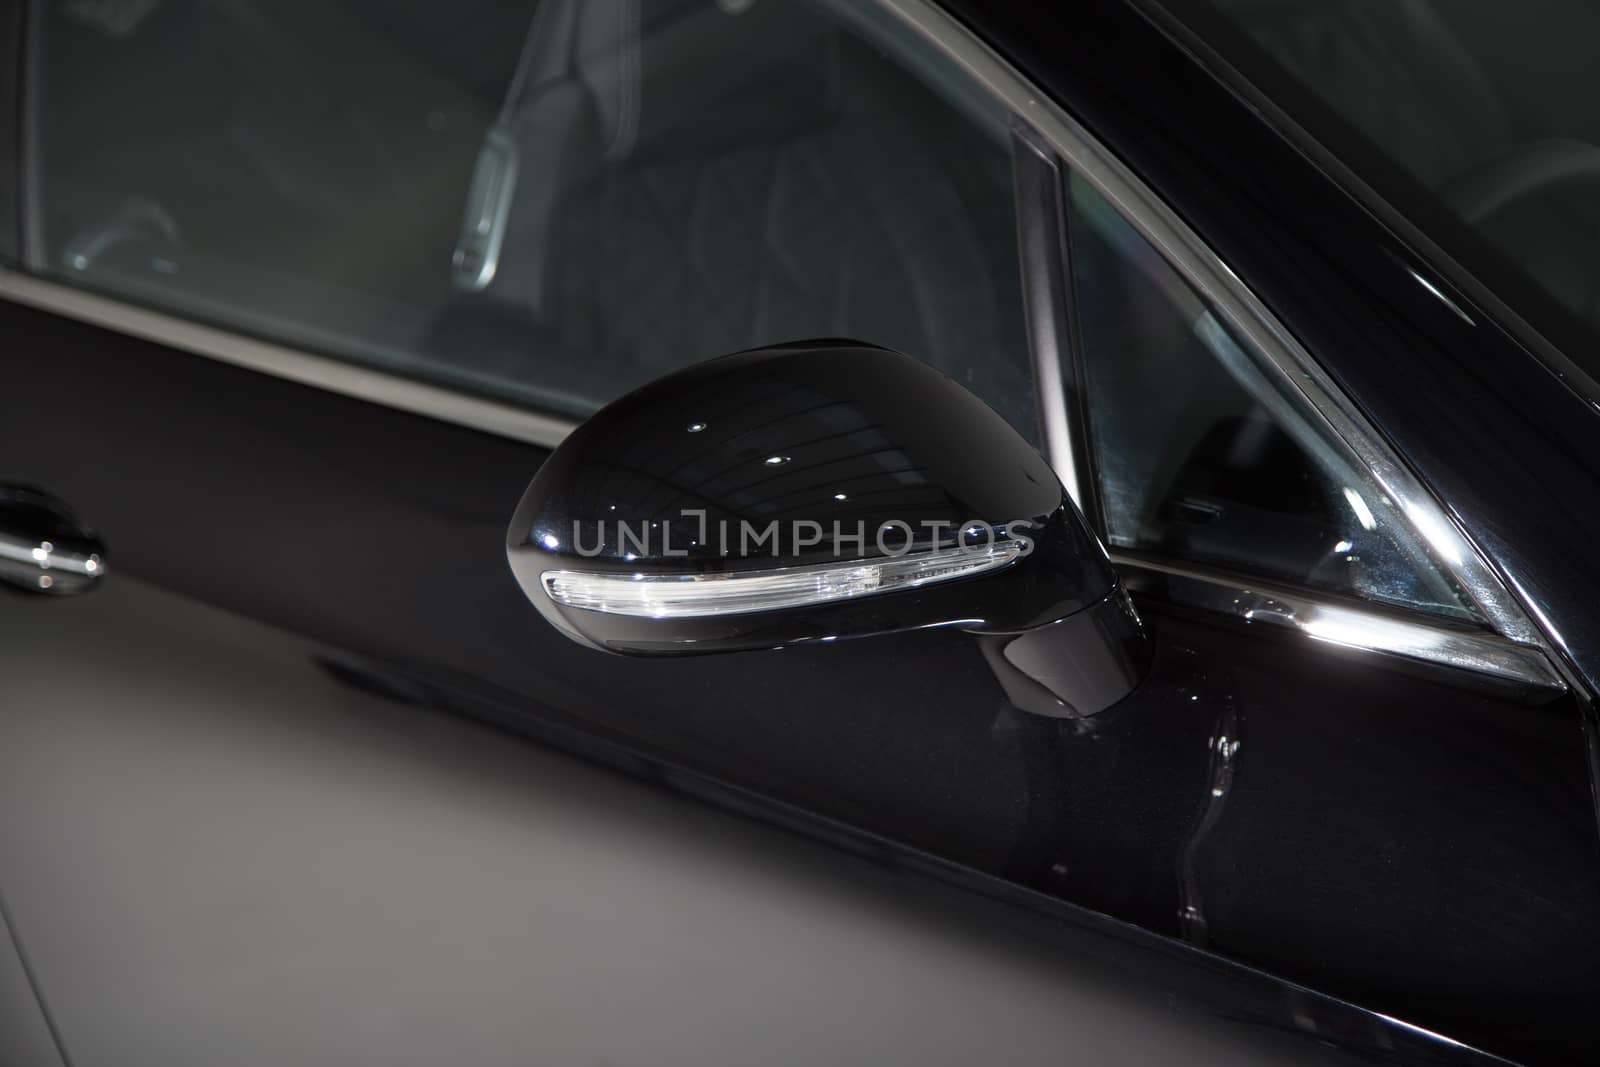 Close up of mirror on black luxury car